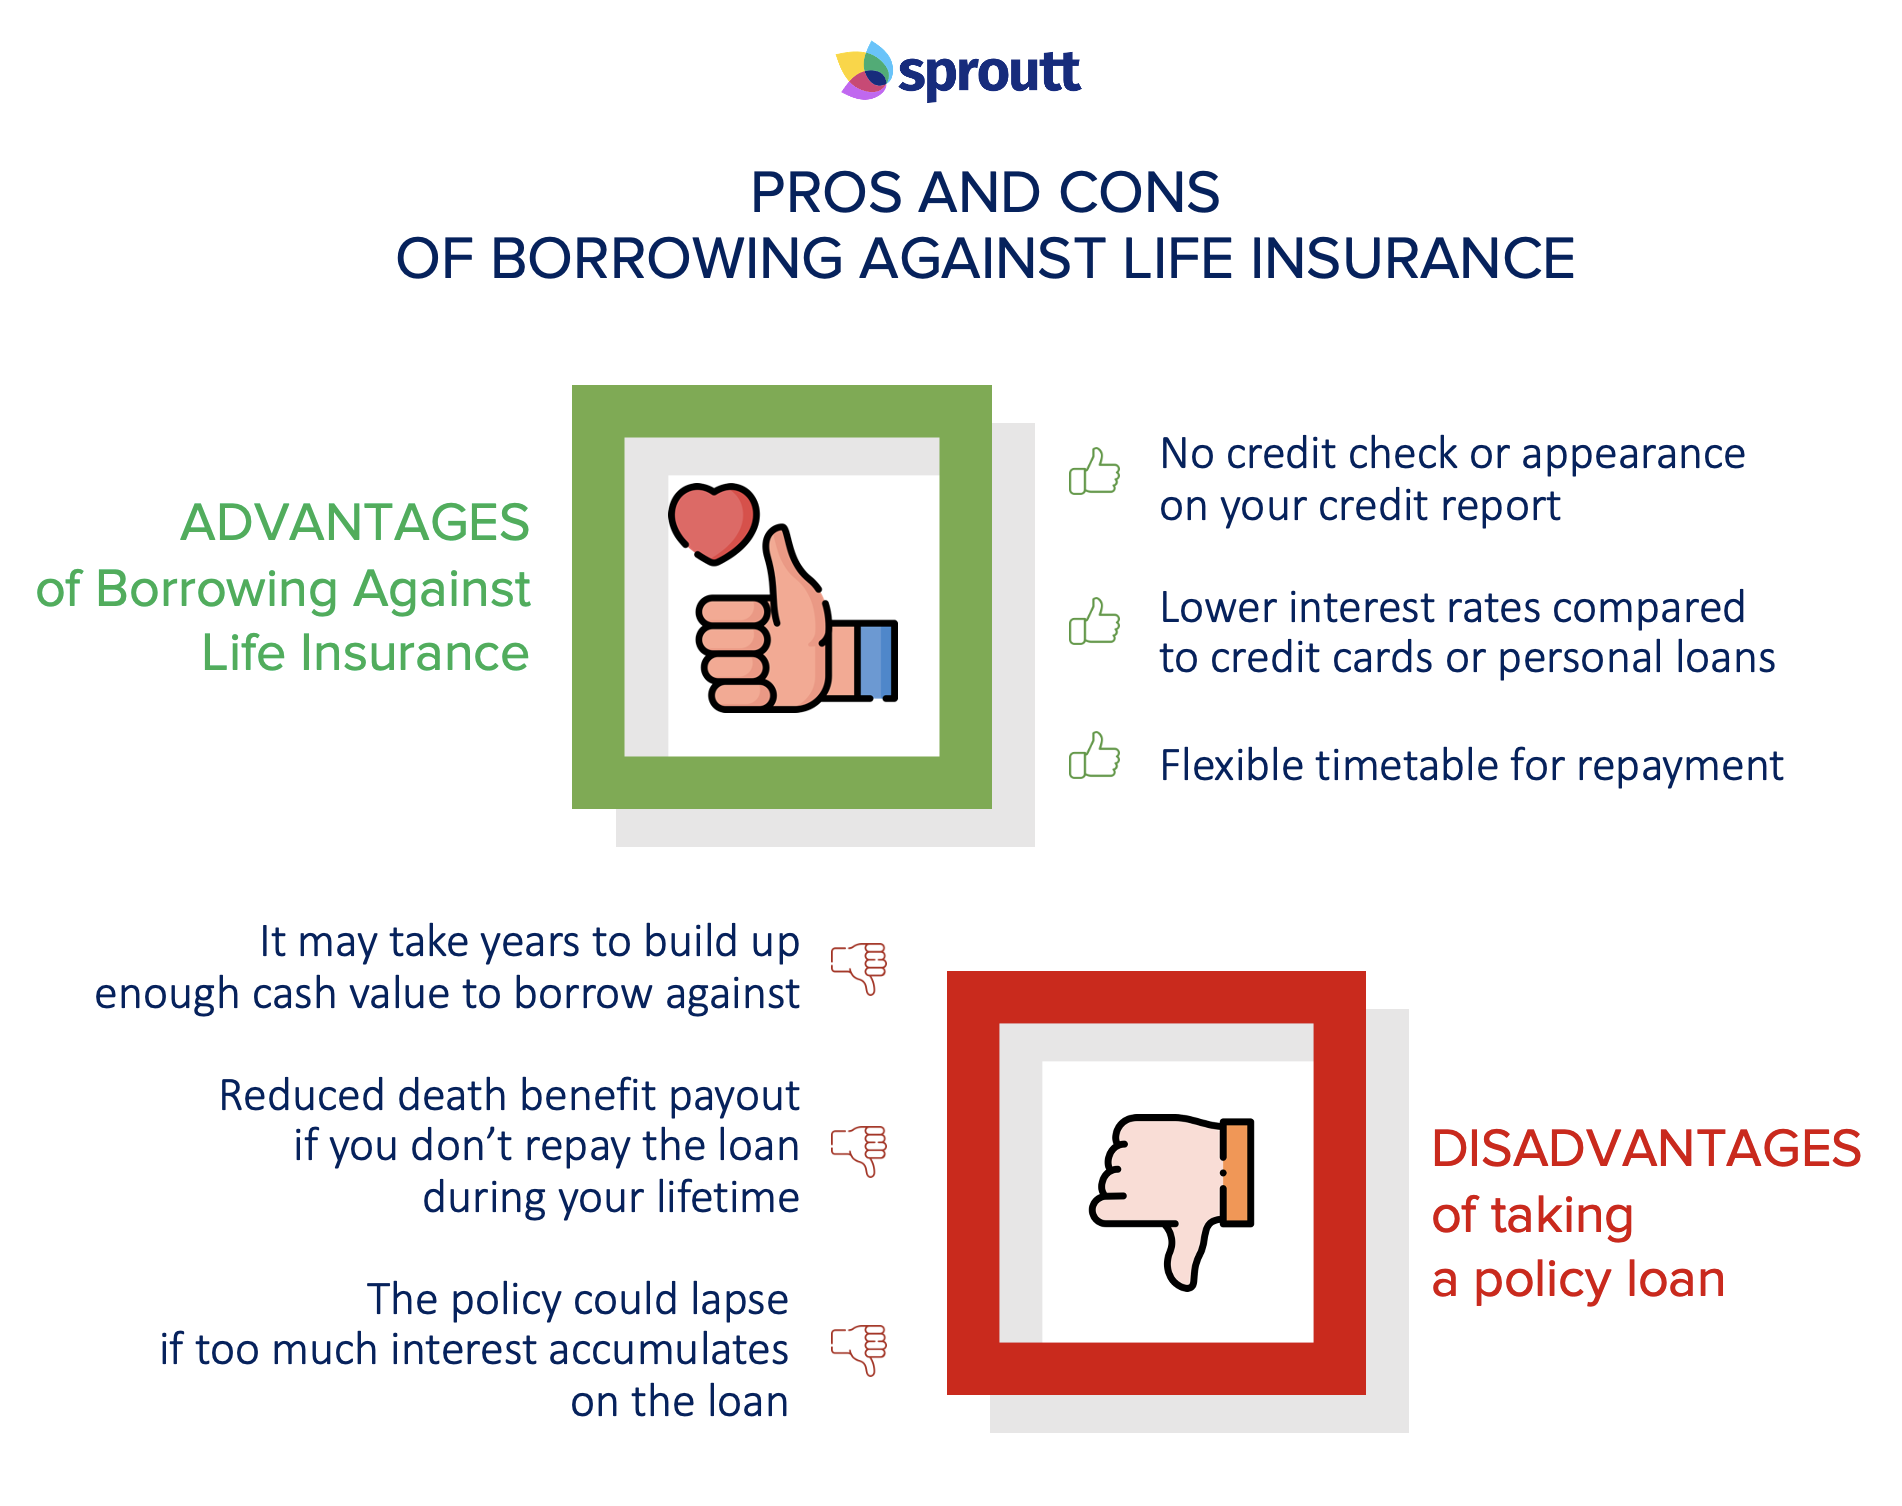 can you borrow against life insurance?